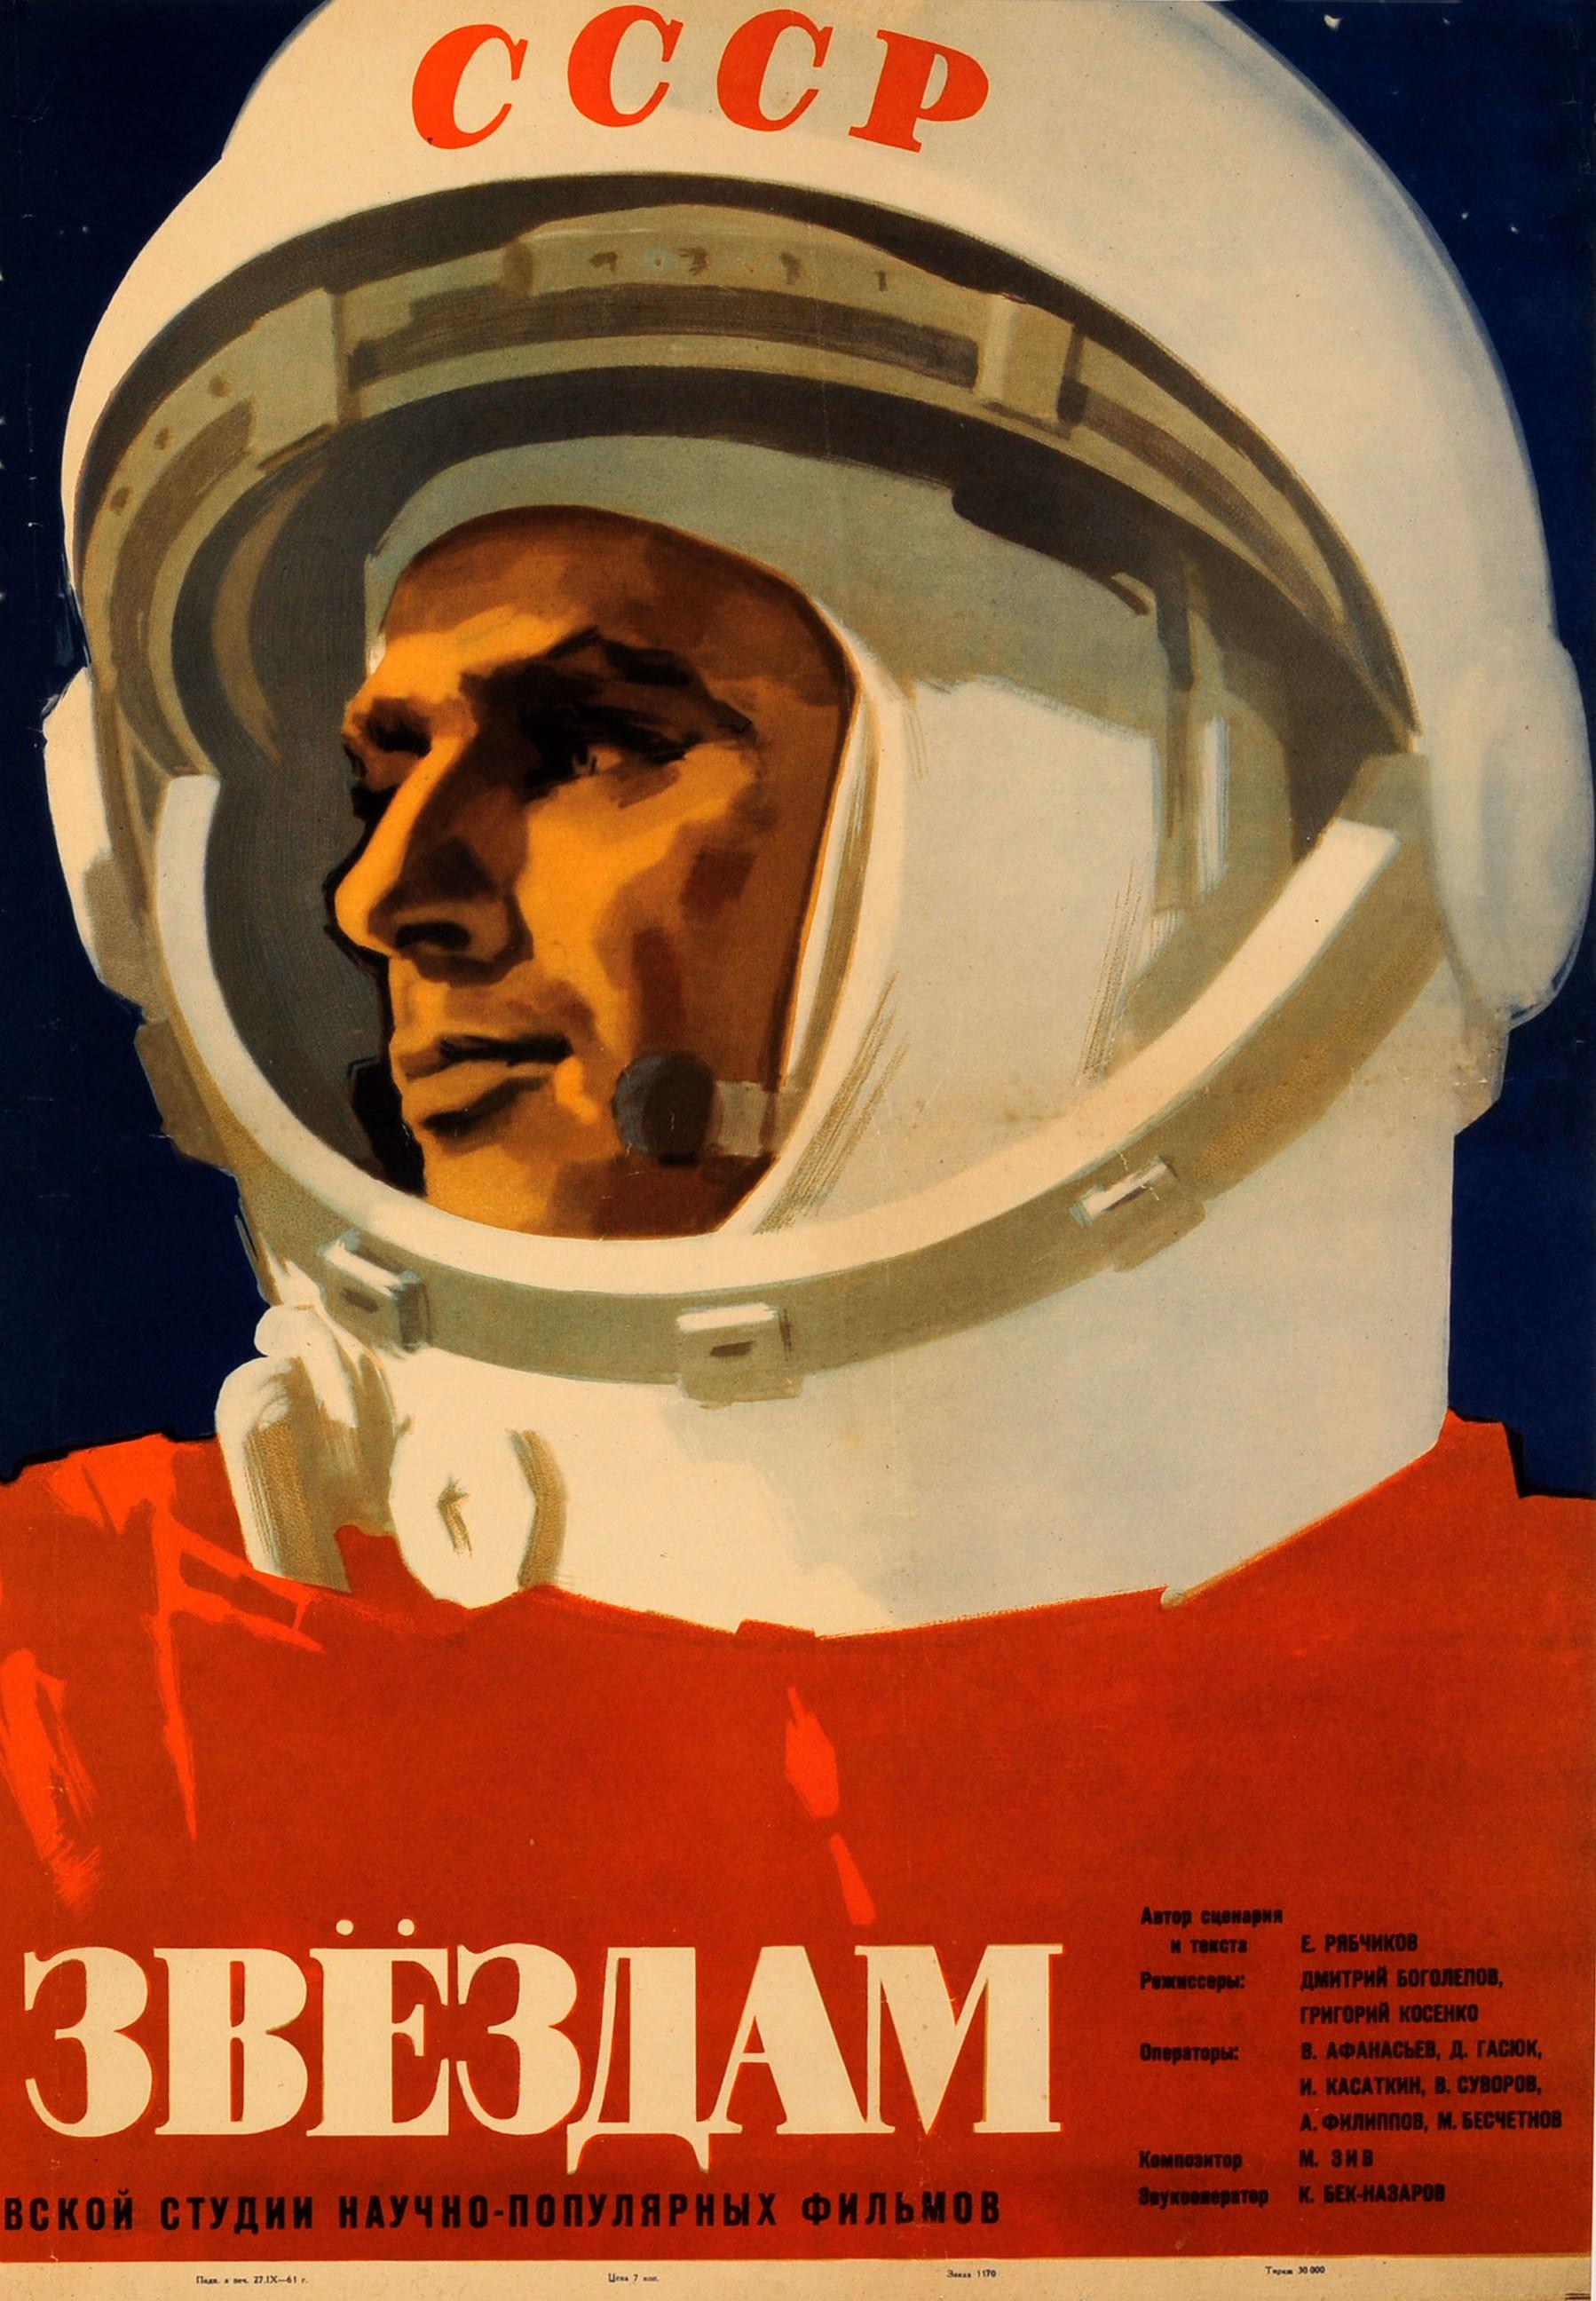 Original Vintage Soviet Space Documentary Movie Poster Cosmonaut Titov Vostok 2 - Black Print by Unknown